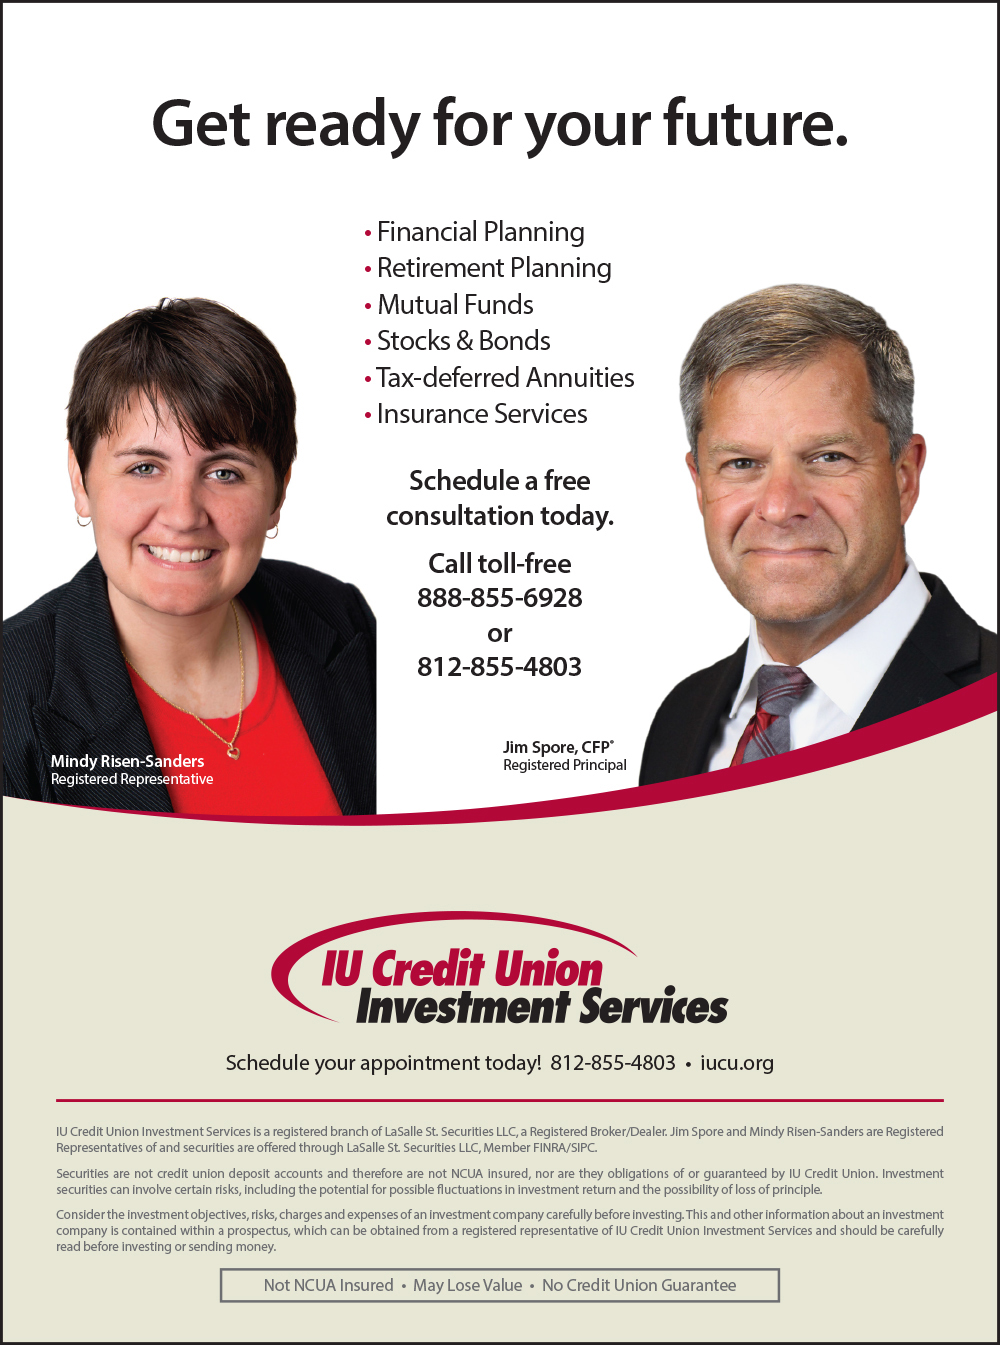 IU Credit Union Investment Services